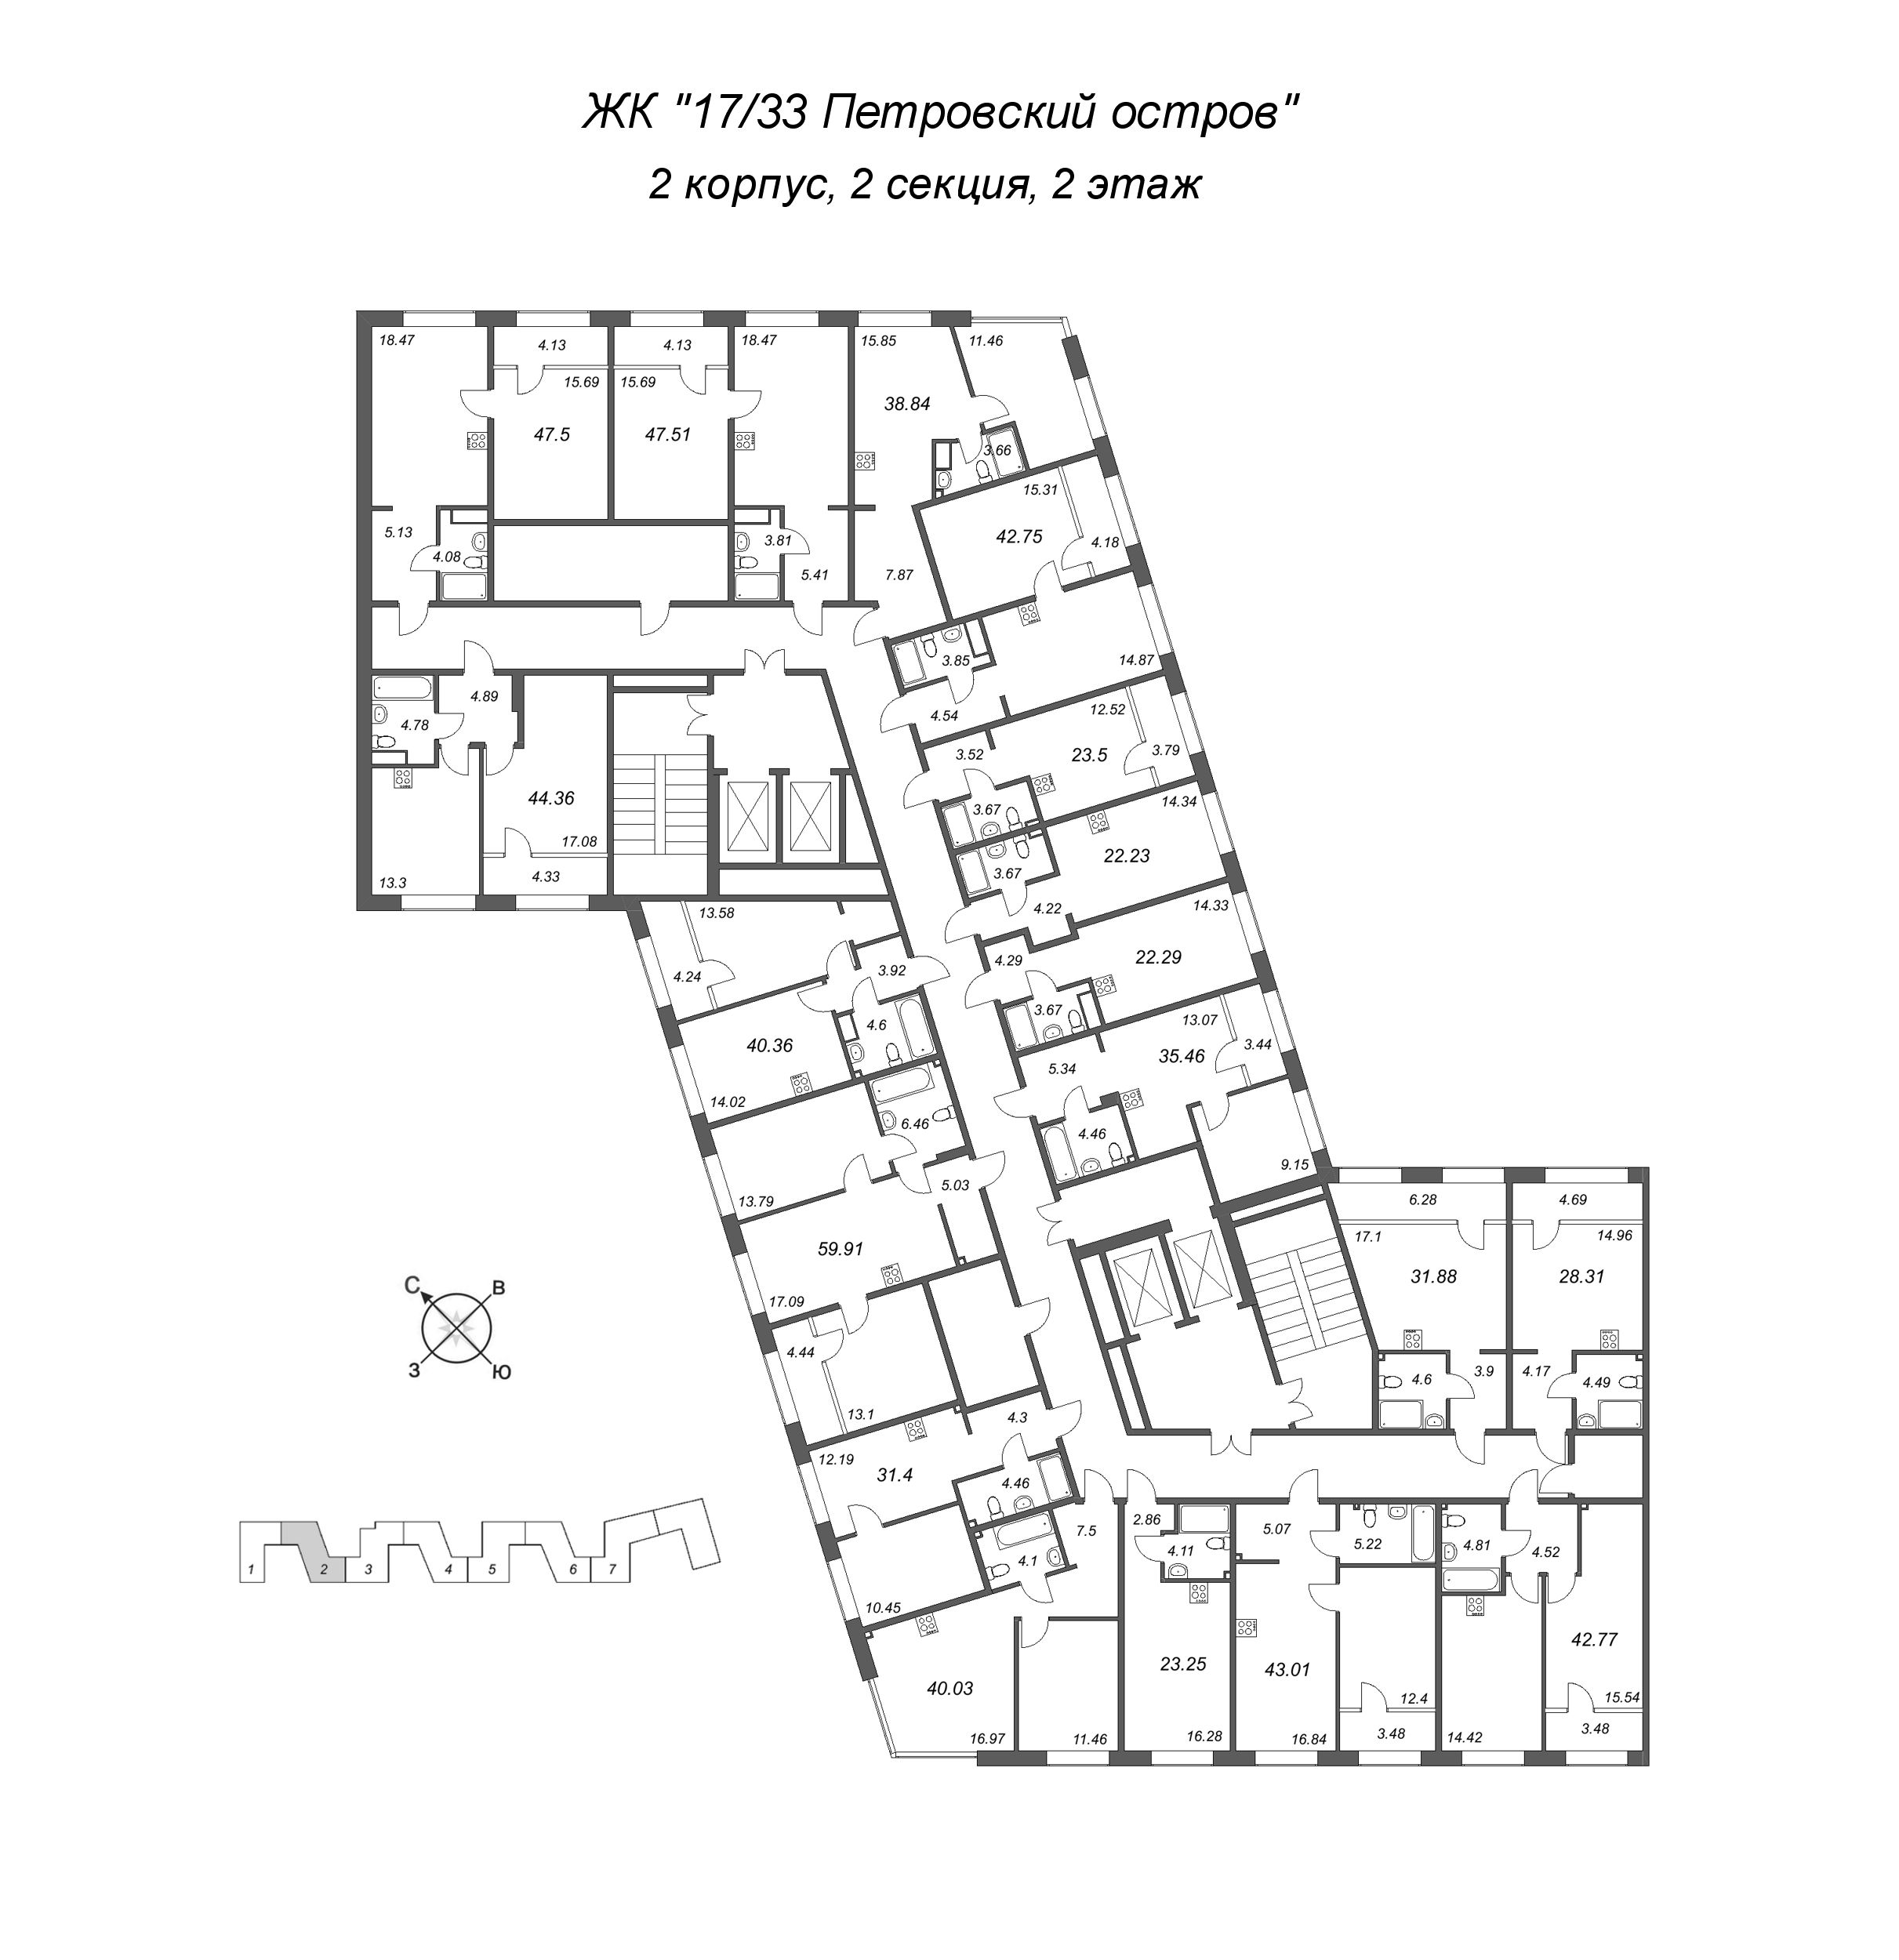 2-комнатная (Евро) квартира, 47.51 м² - планировка этажа